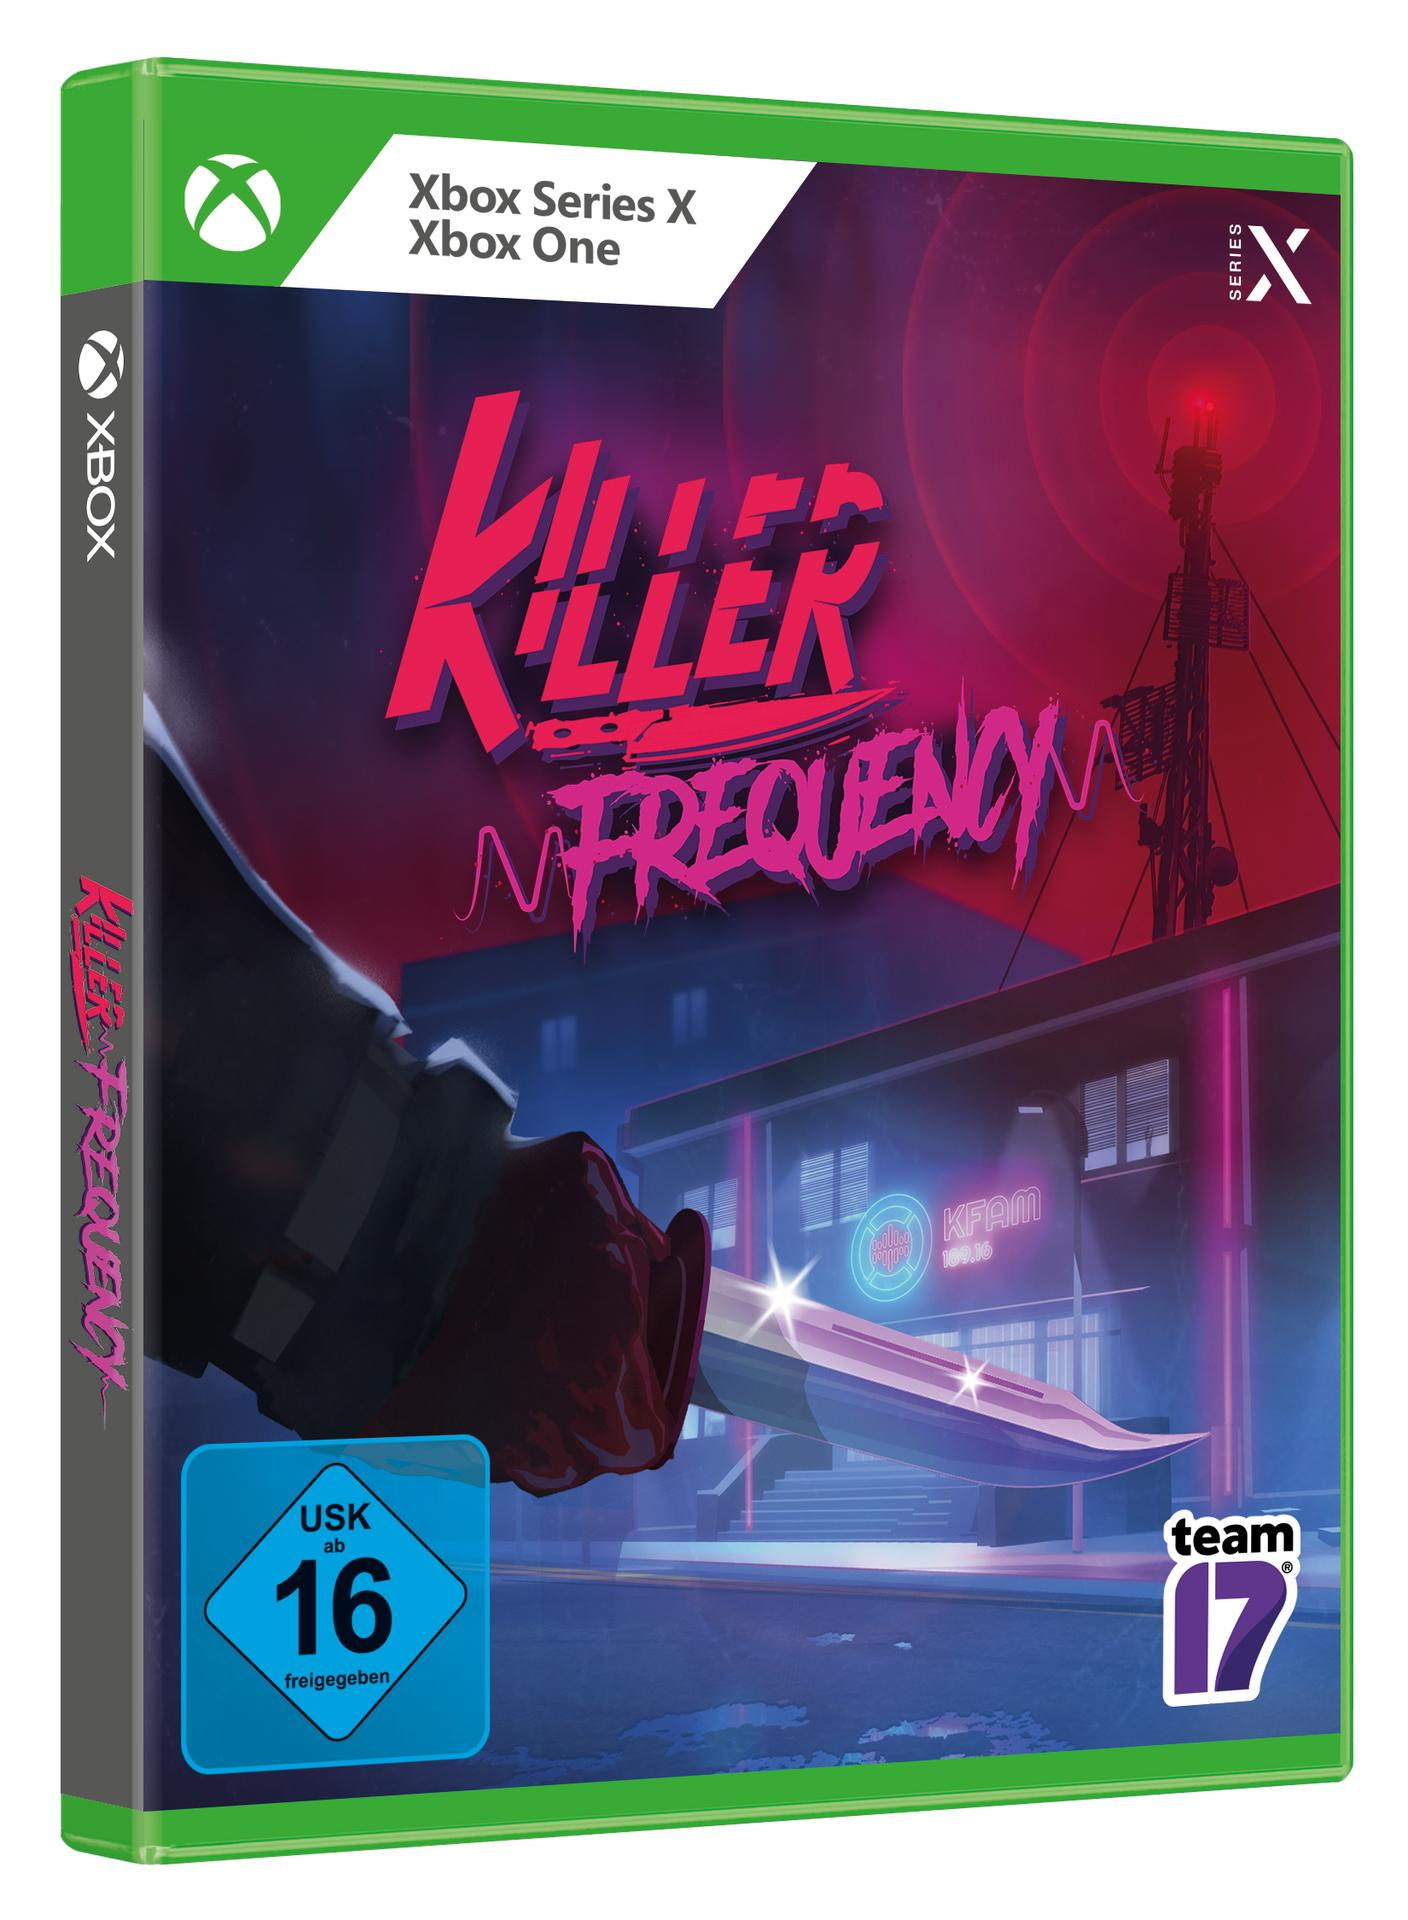 Series & Frequency [Xbox One Xbox X] - Killer